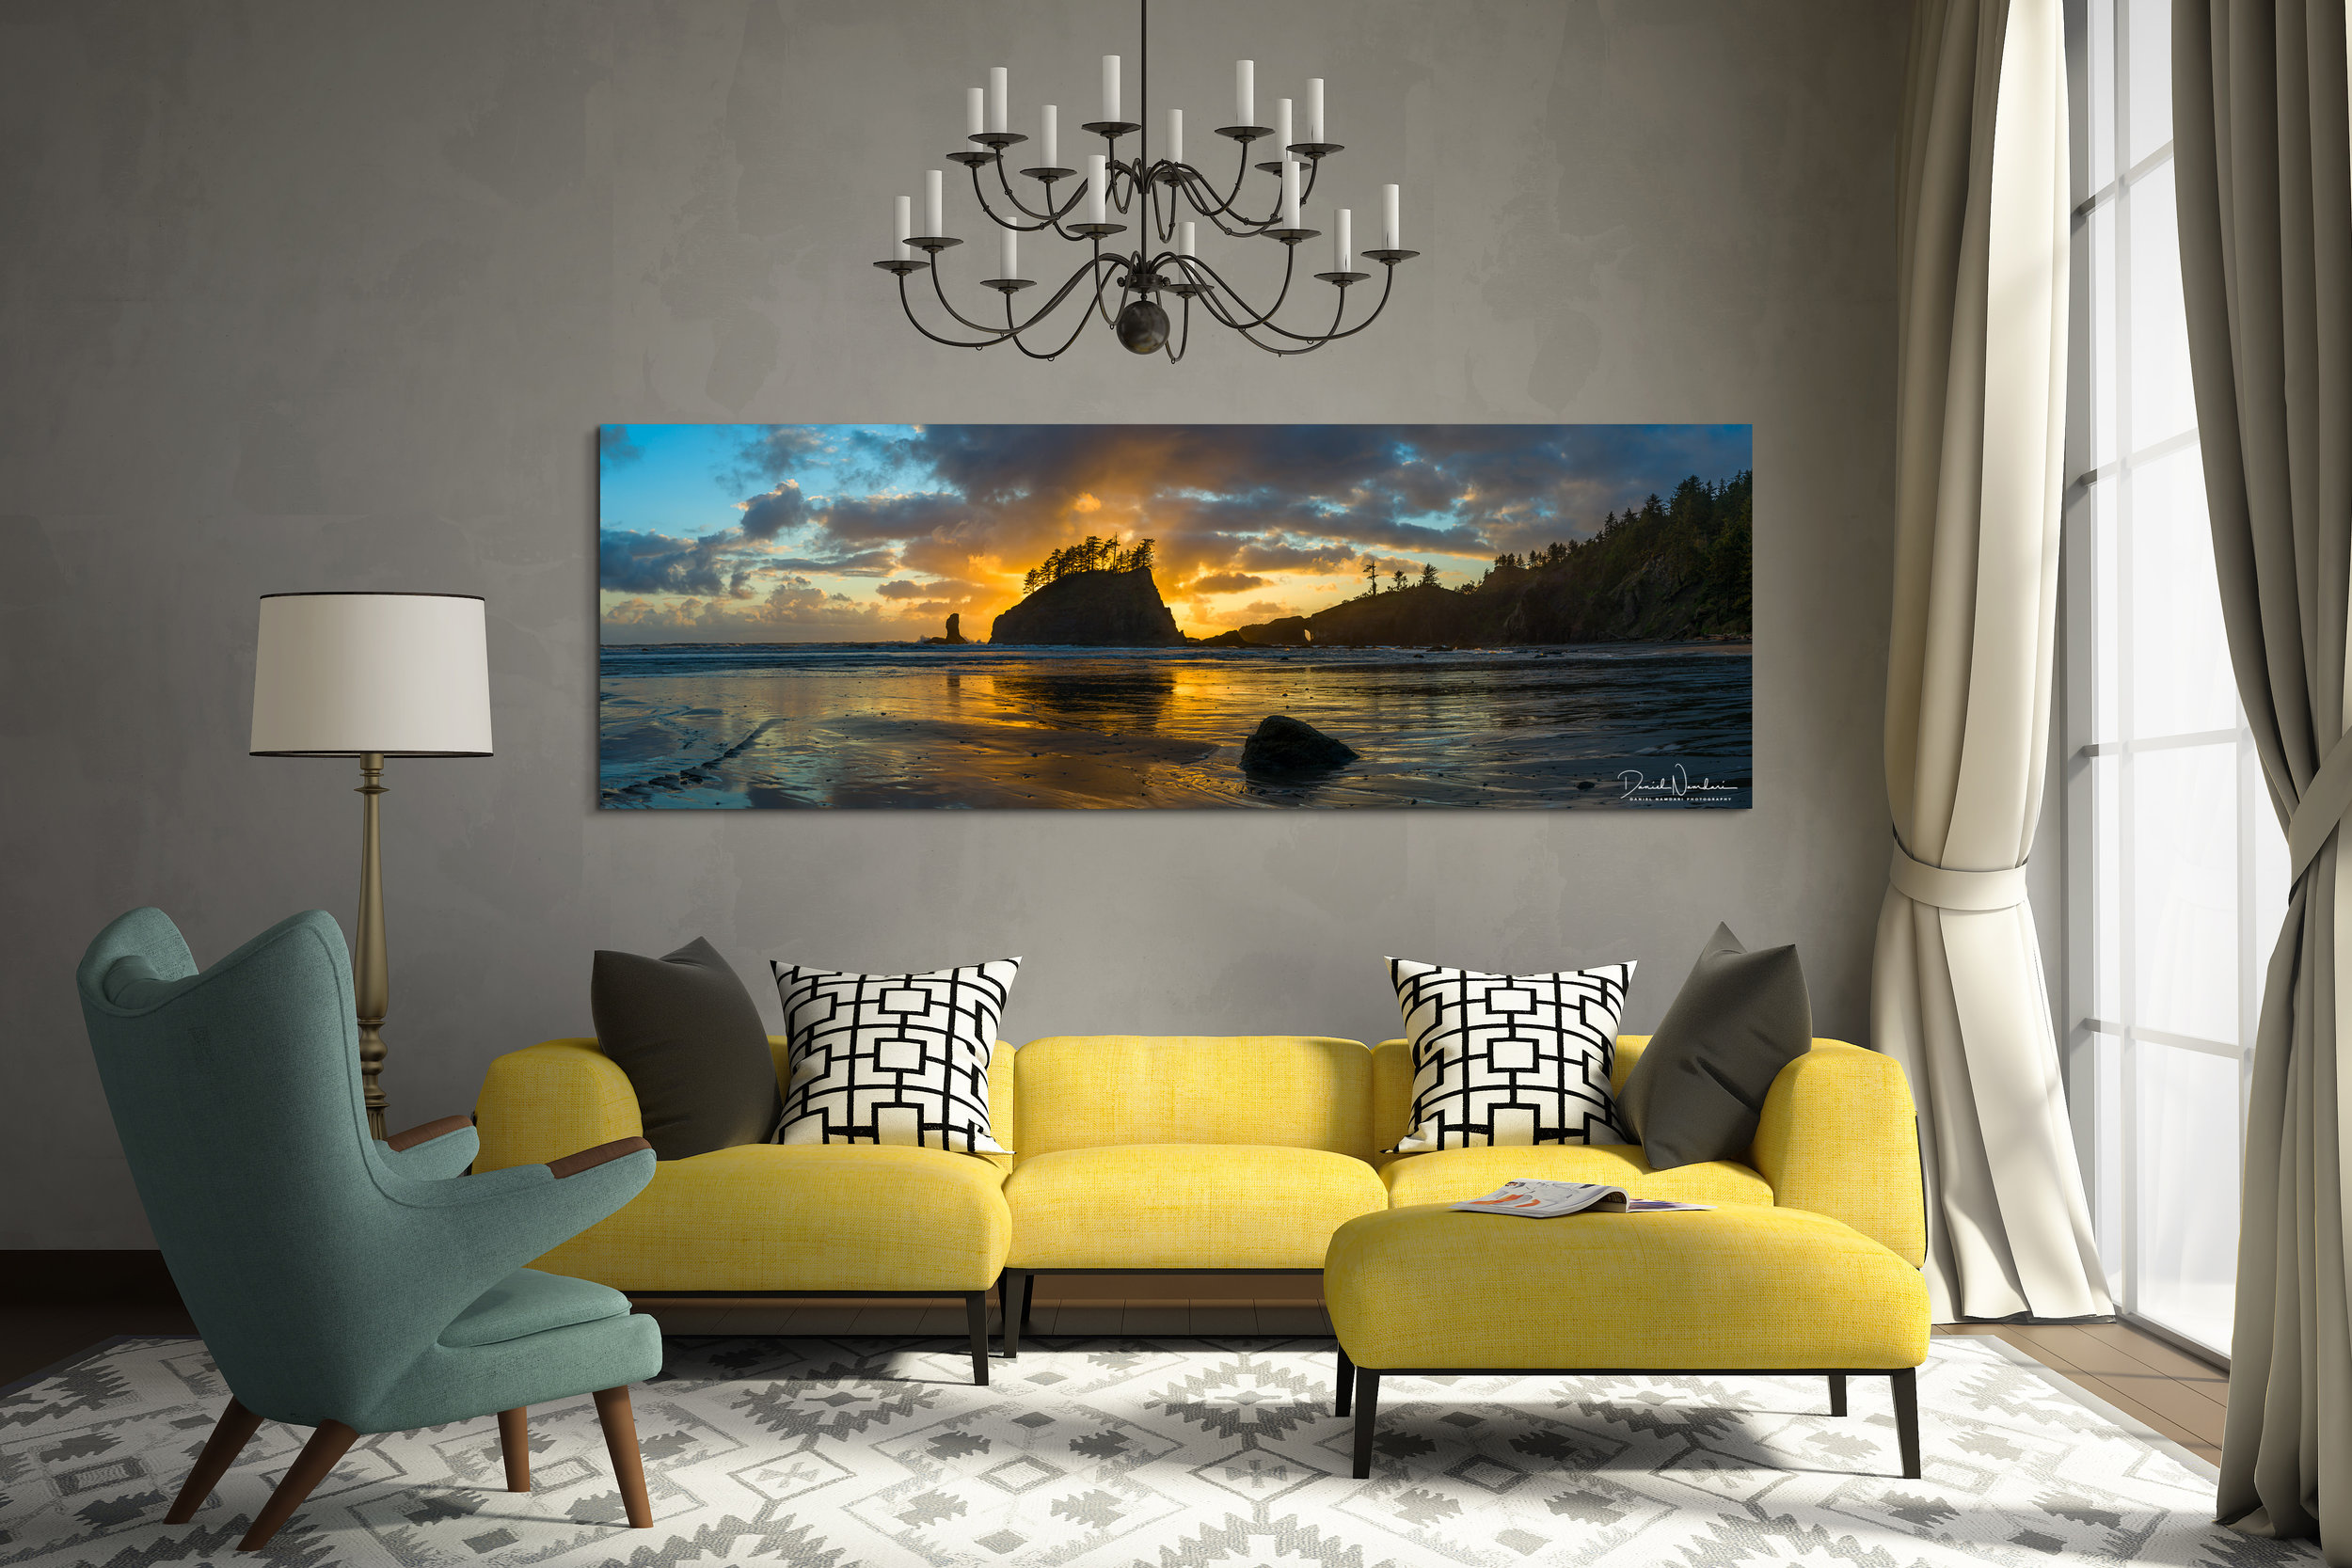 Romantic elegant living room with armchair